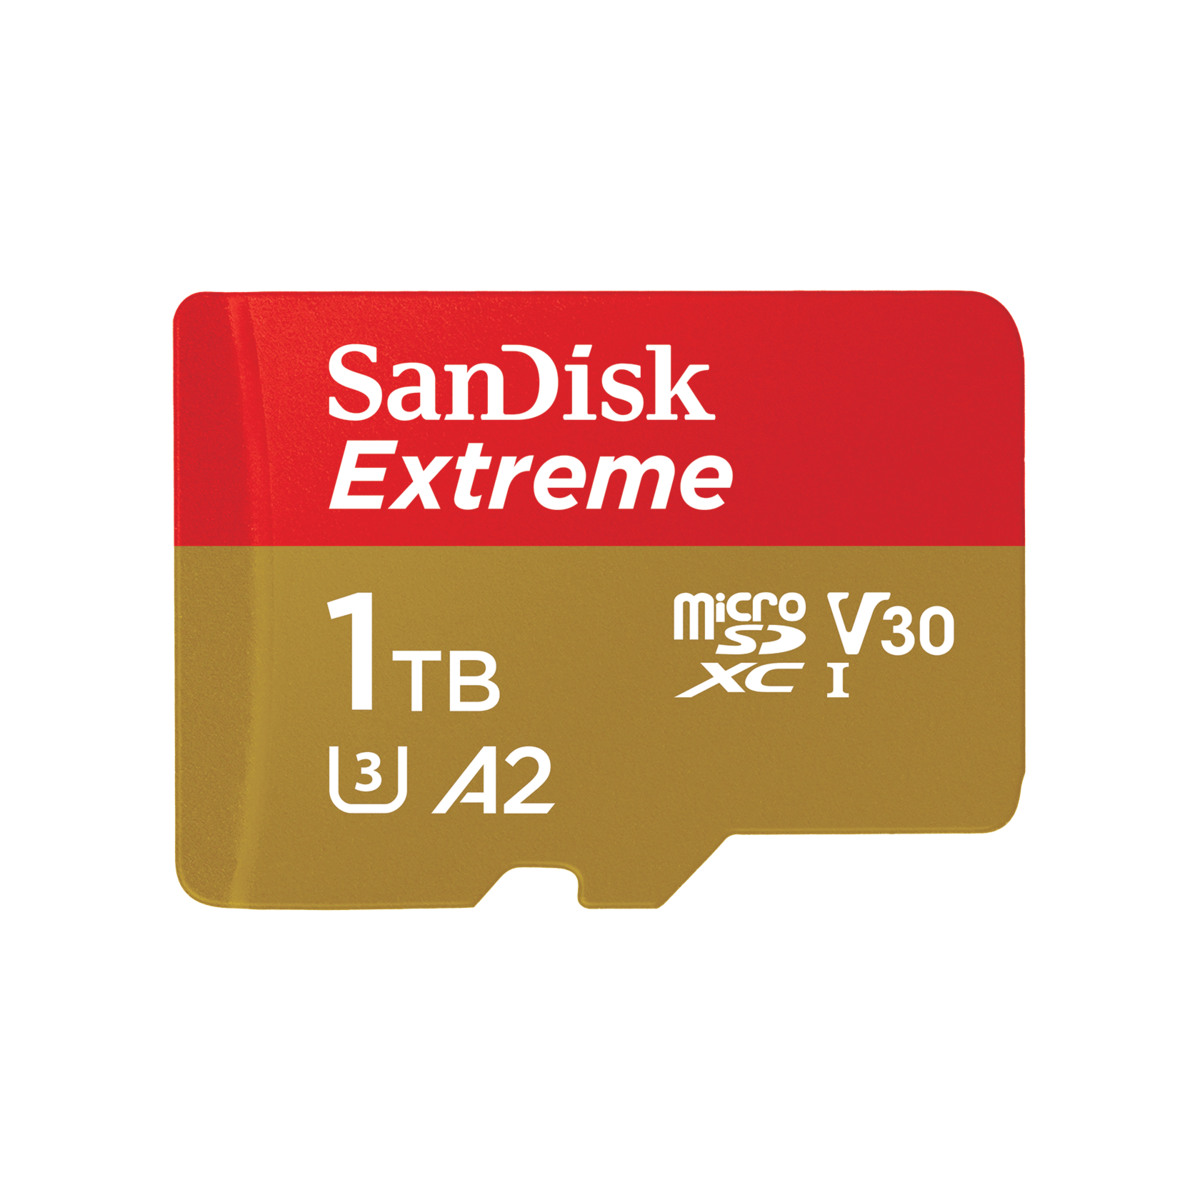 SanDisk Extreme MicroSD UHS-I Card 1TB